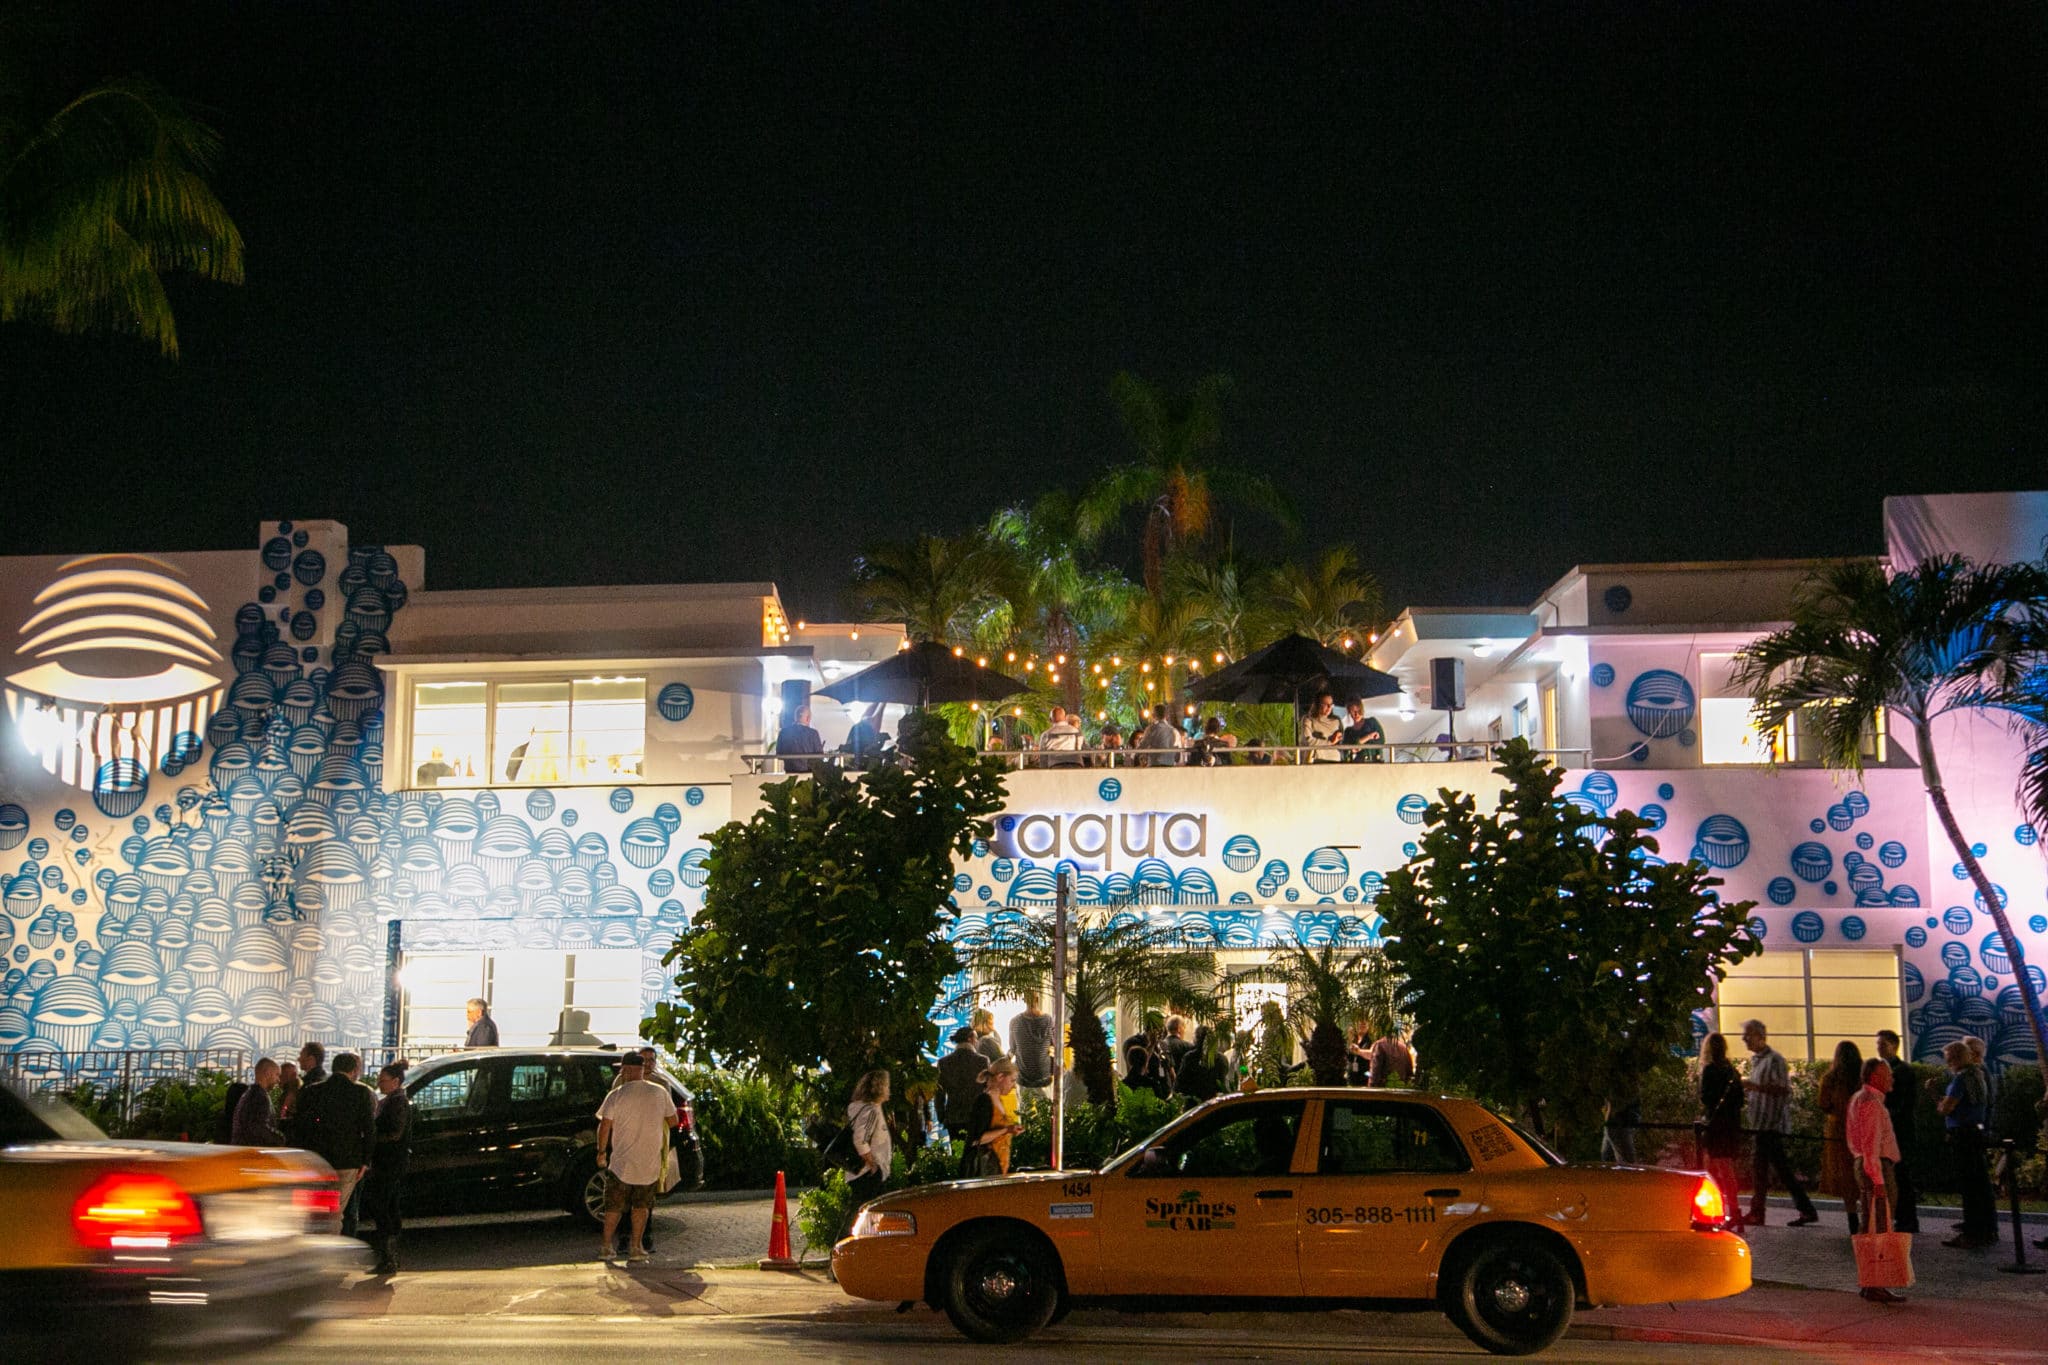 Aqua Art Miami exterior at night